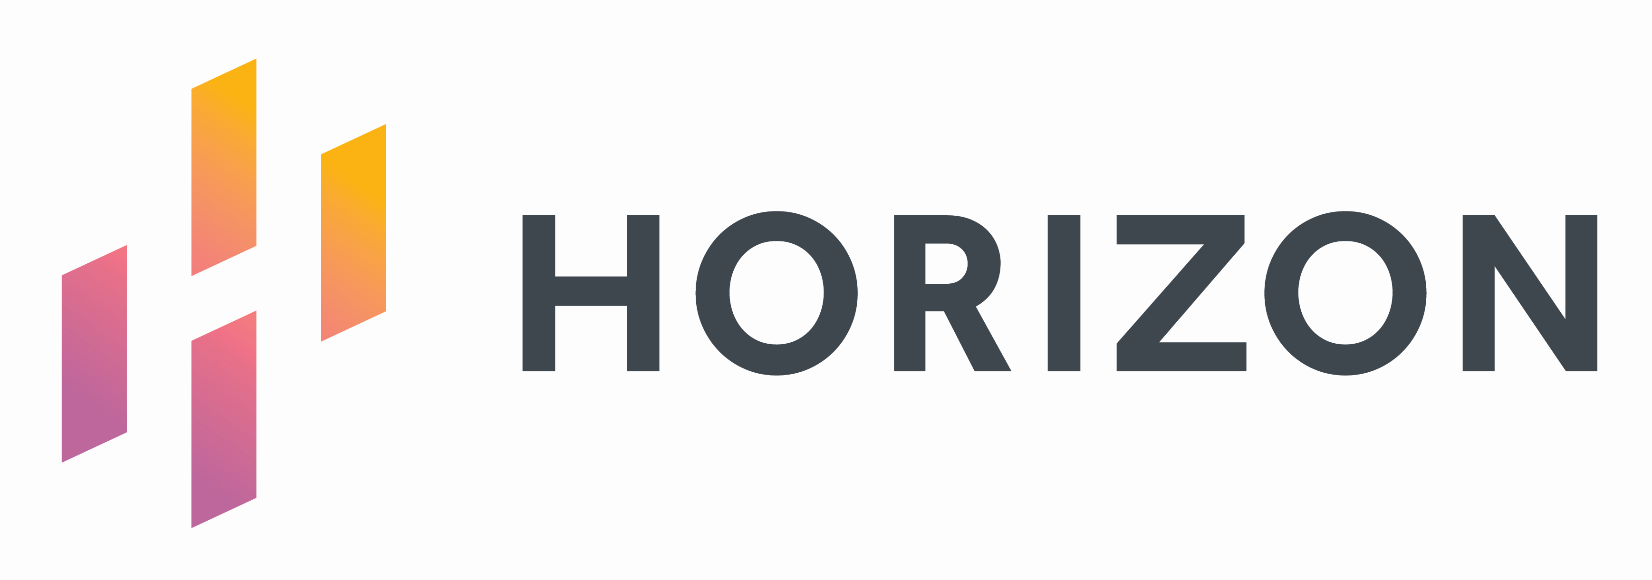 Horizon Therapeutics Company Logo